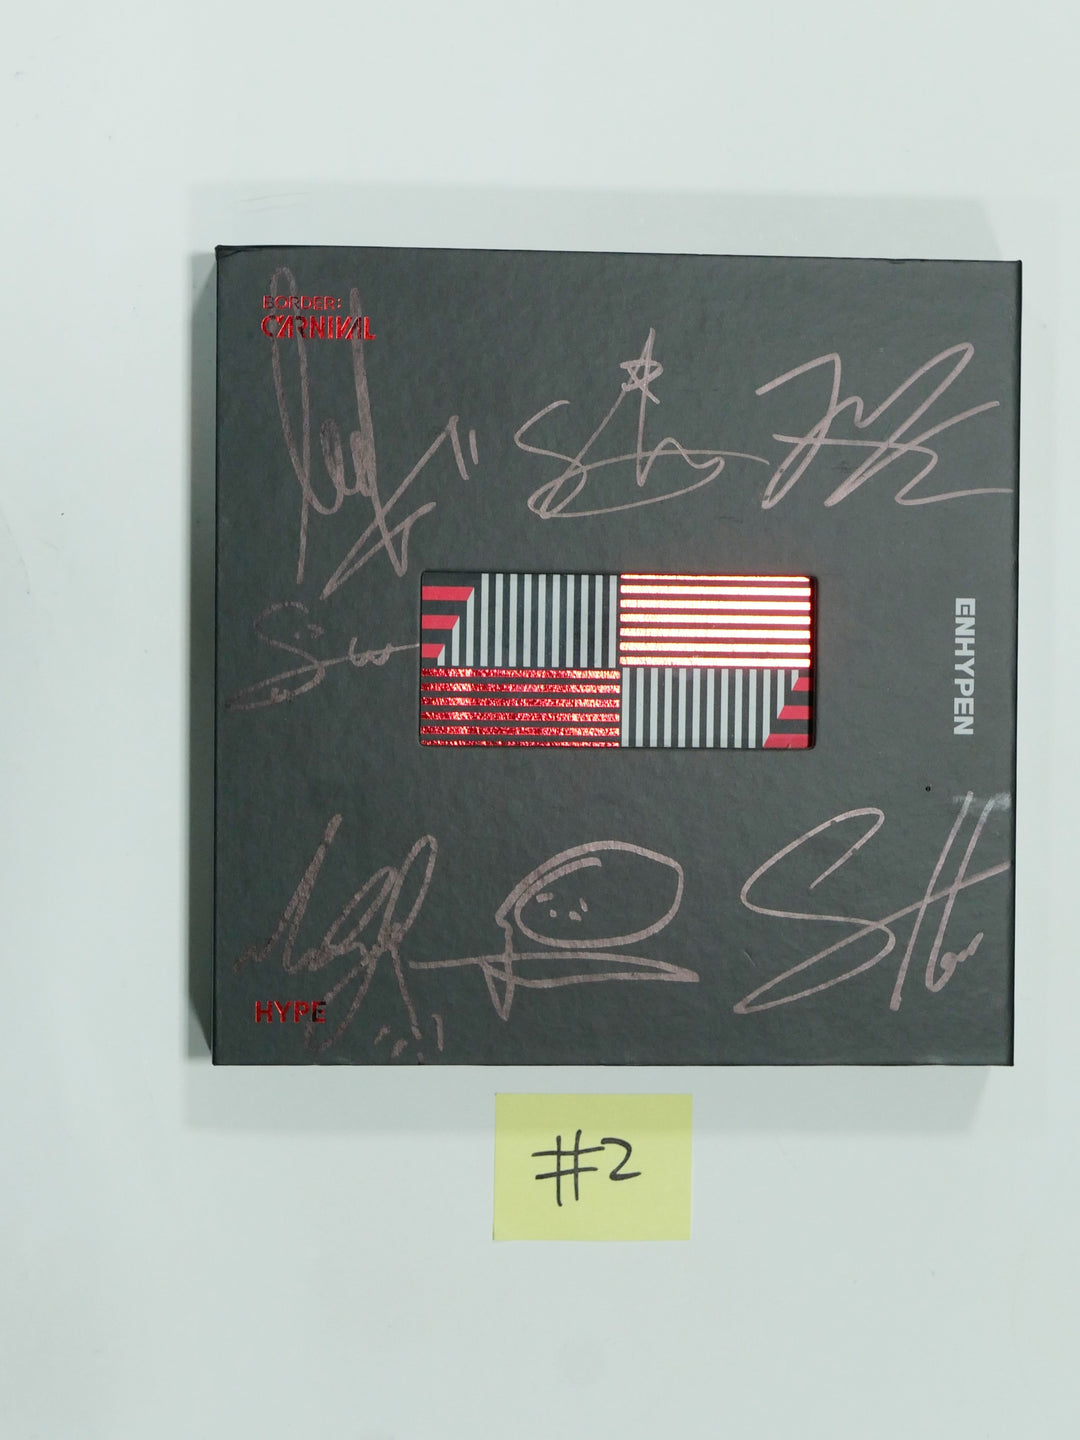 Blackpink, BTS, Enhypen - Hand Autographed(Signed) Promo Album